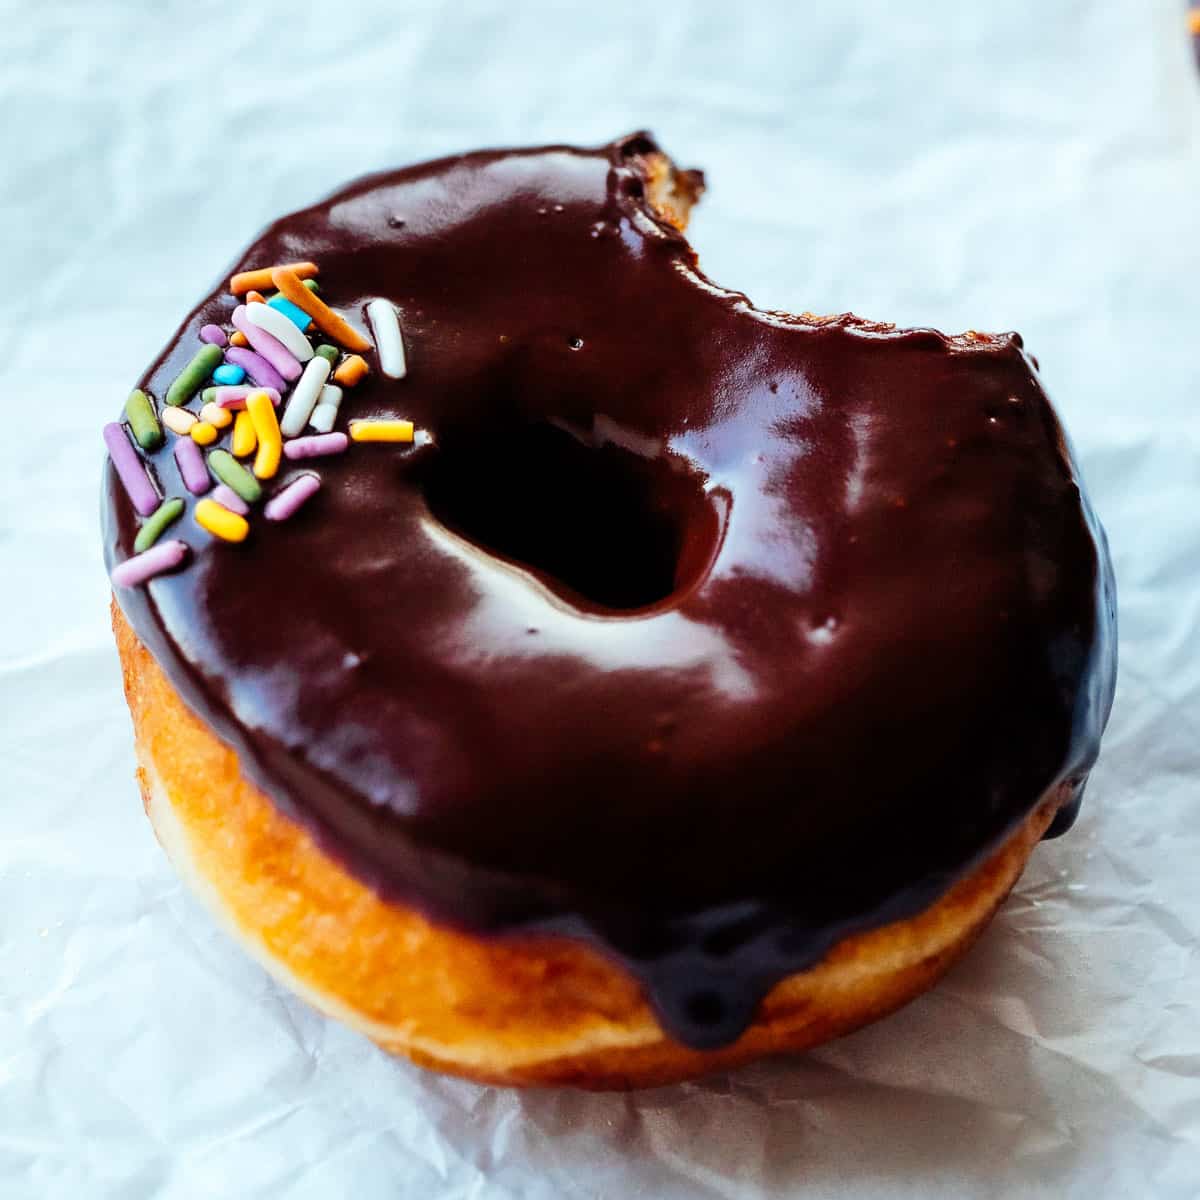 vegan chocolate glaze donuts with sprinkles bit into